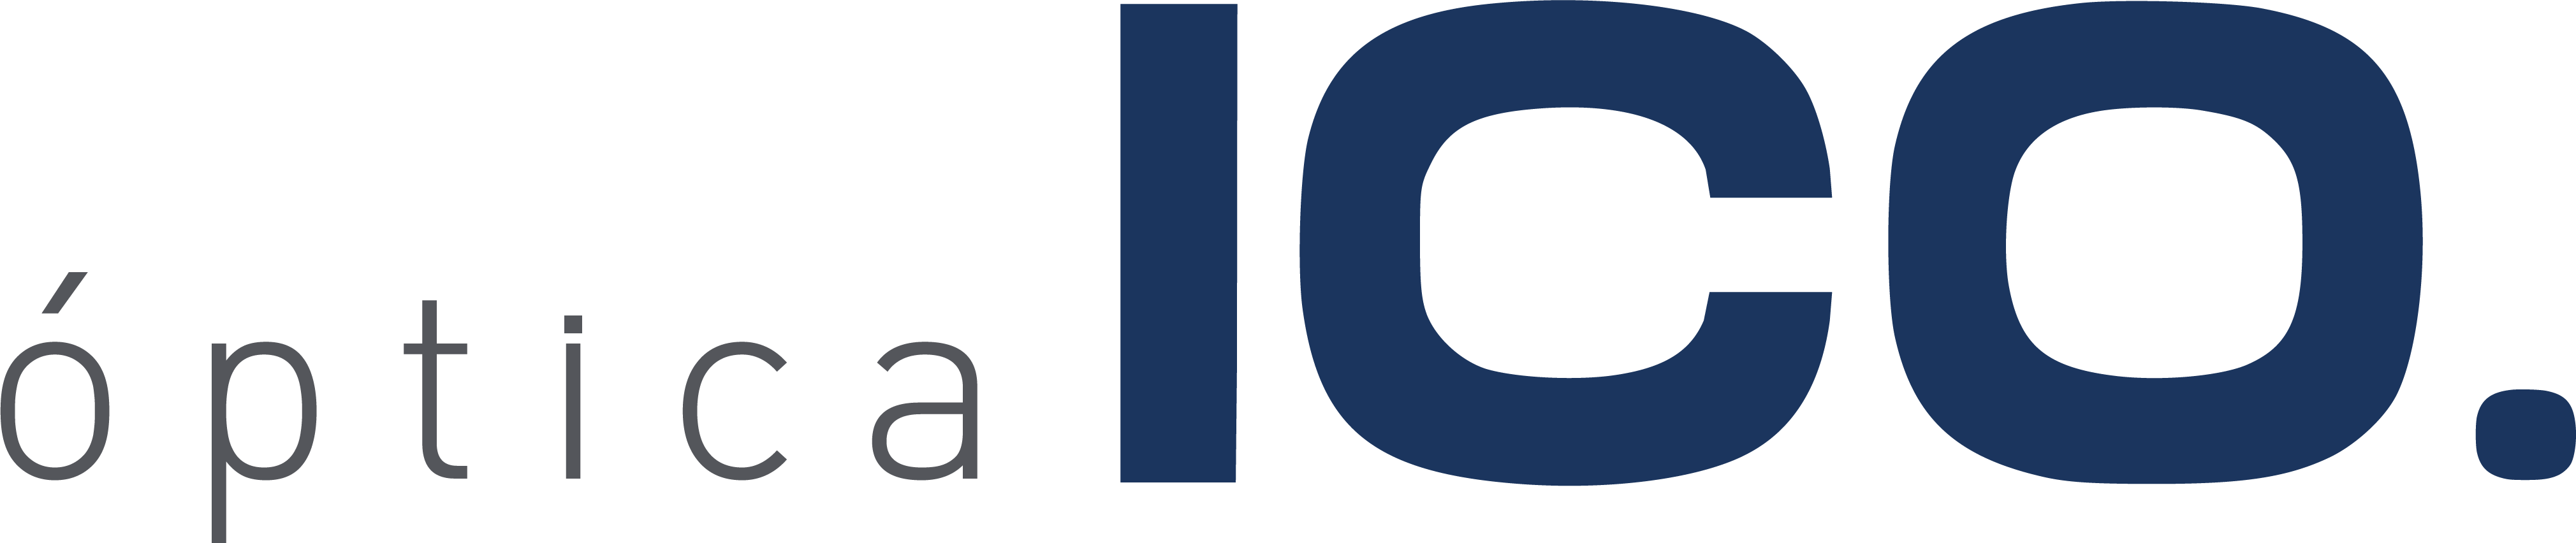 Optica ICO